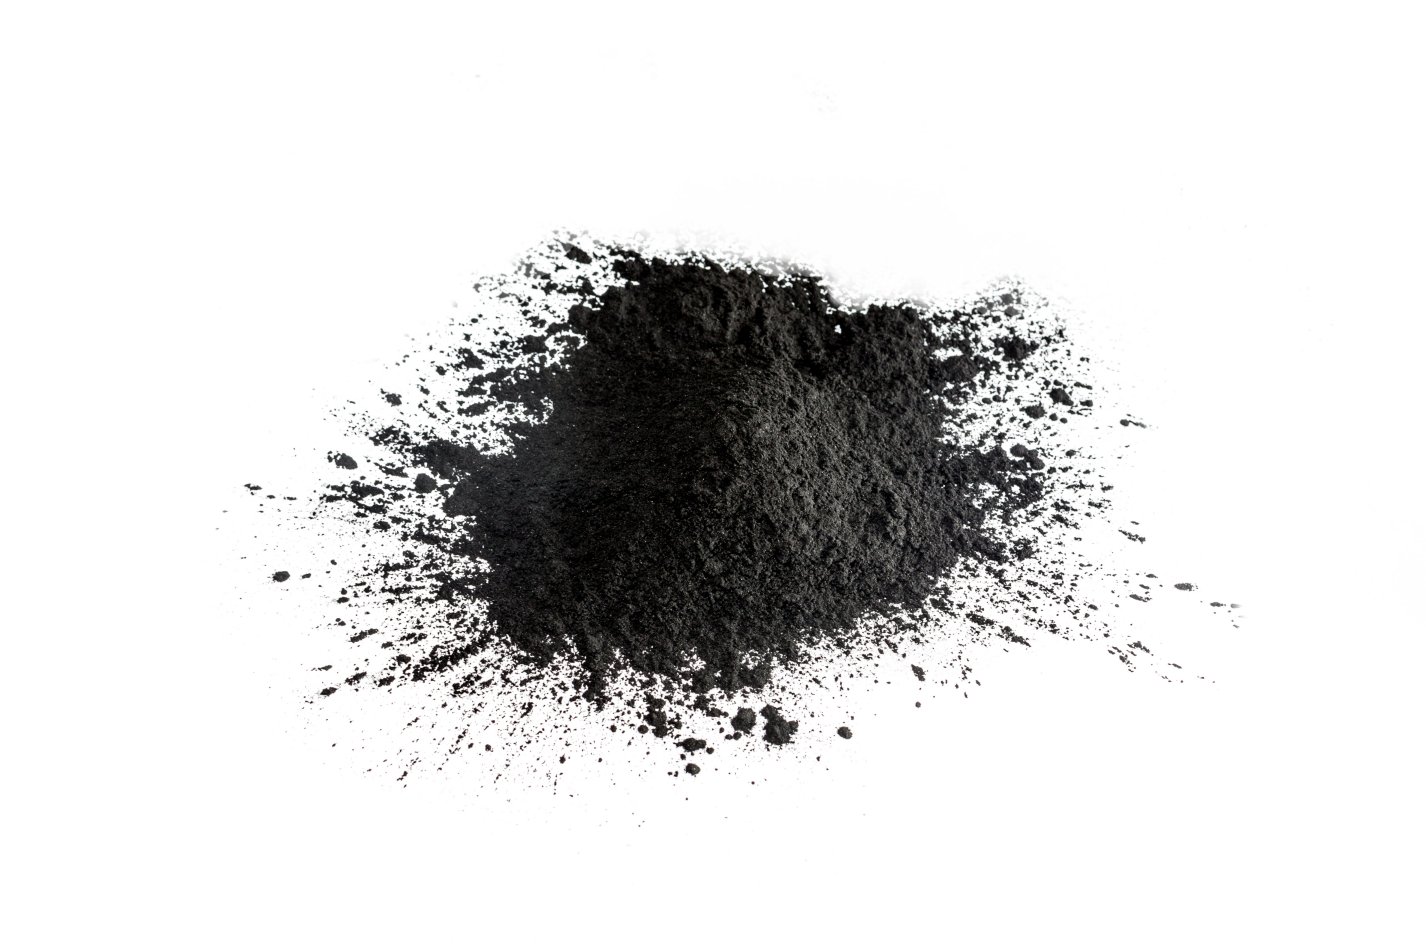 Carbon black, an important ingrdient in elastomers